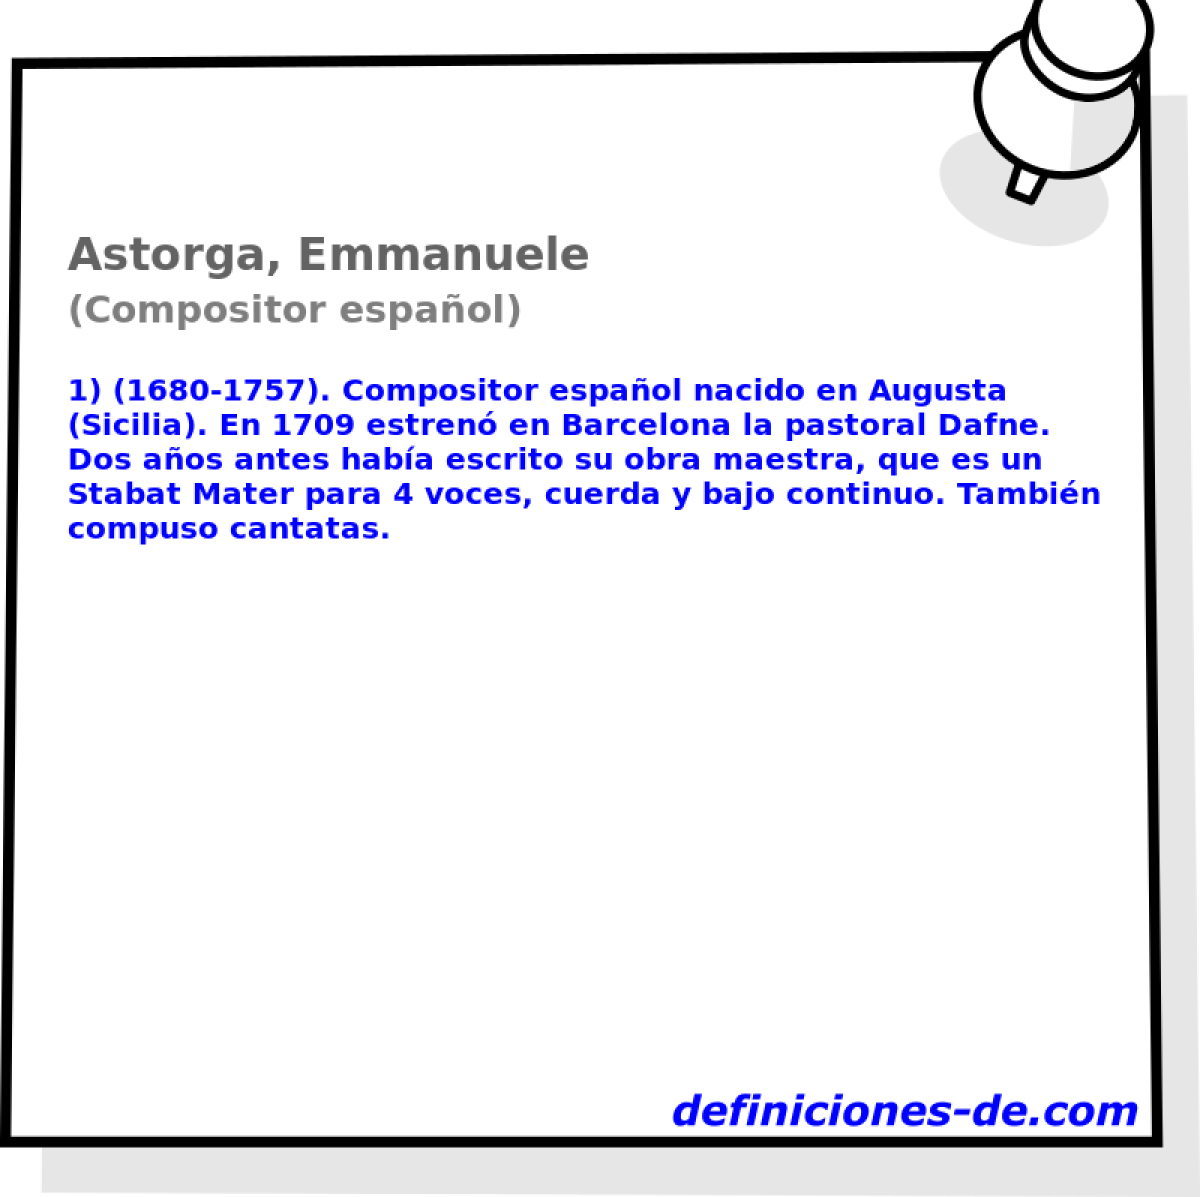 Astorga, Emmanuele (Compositor espaol)